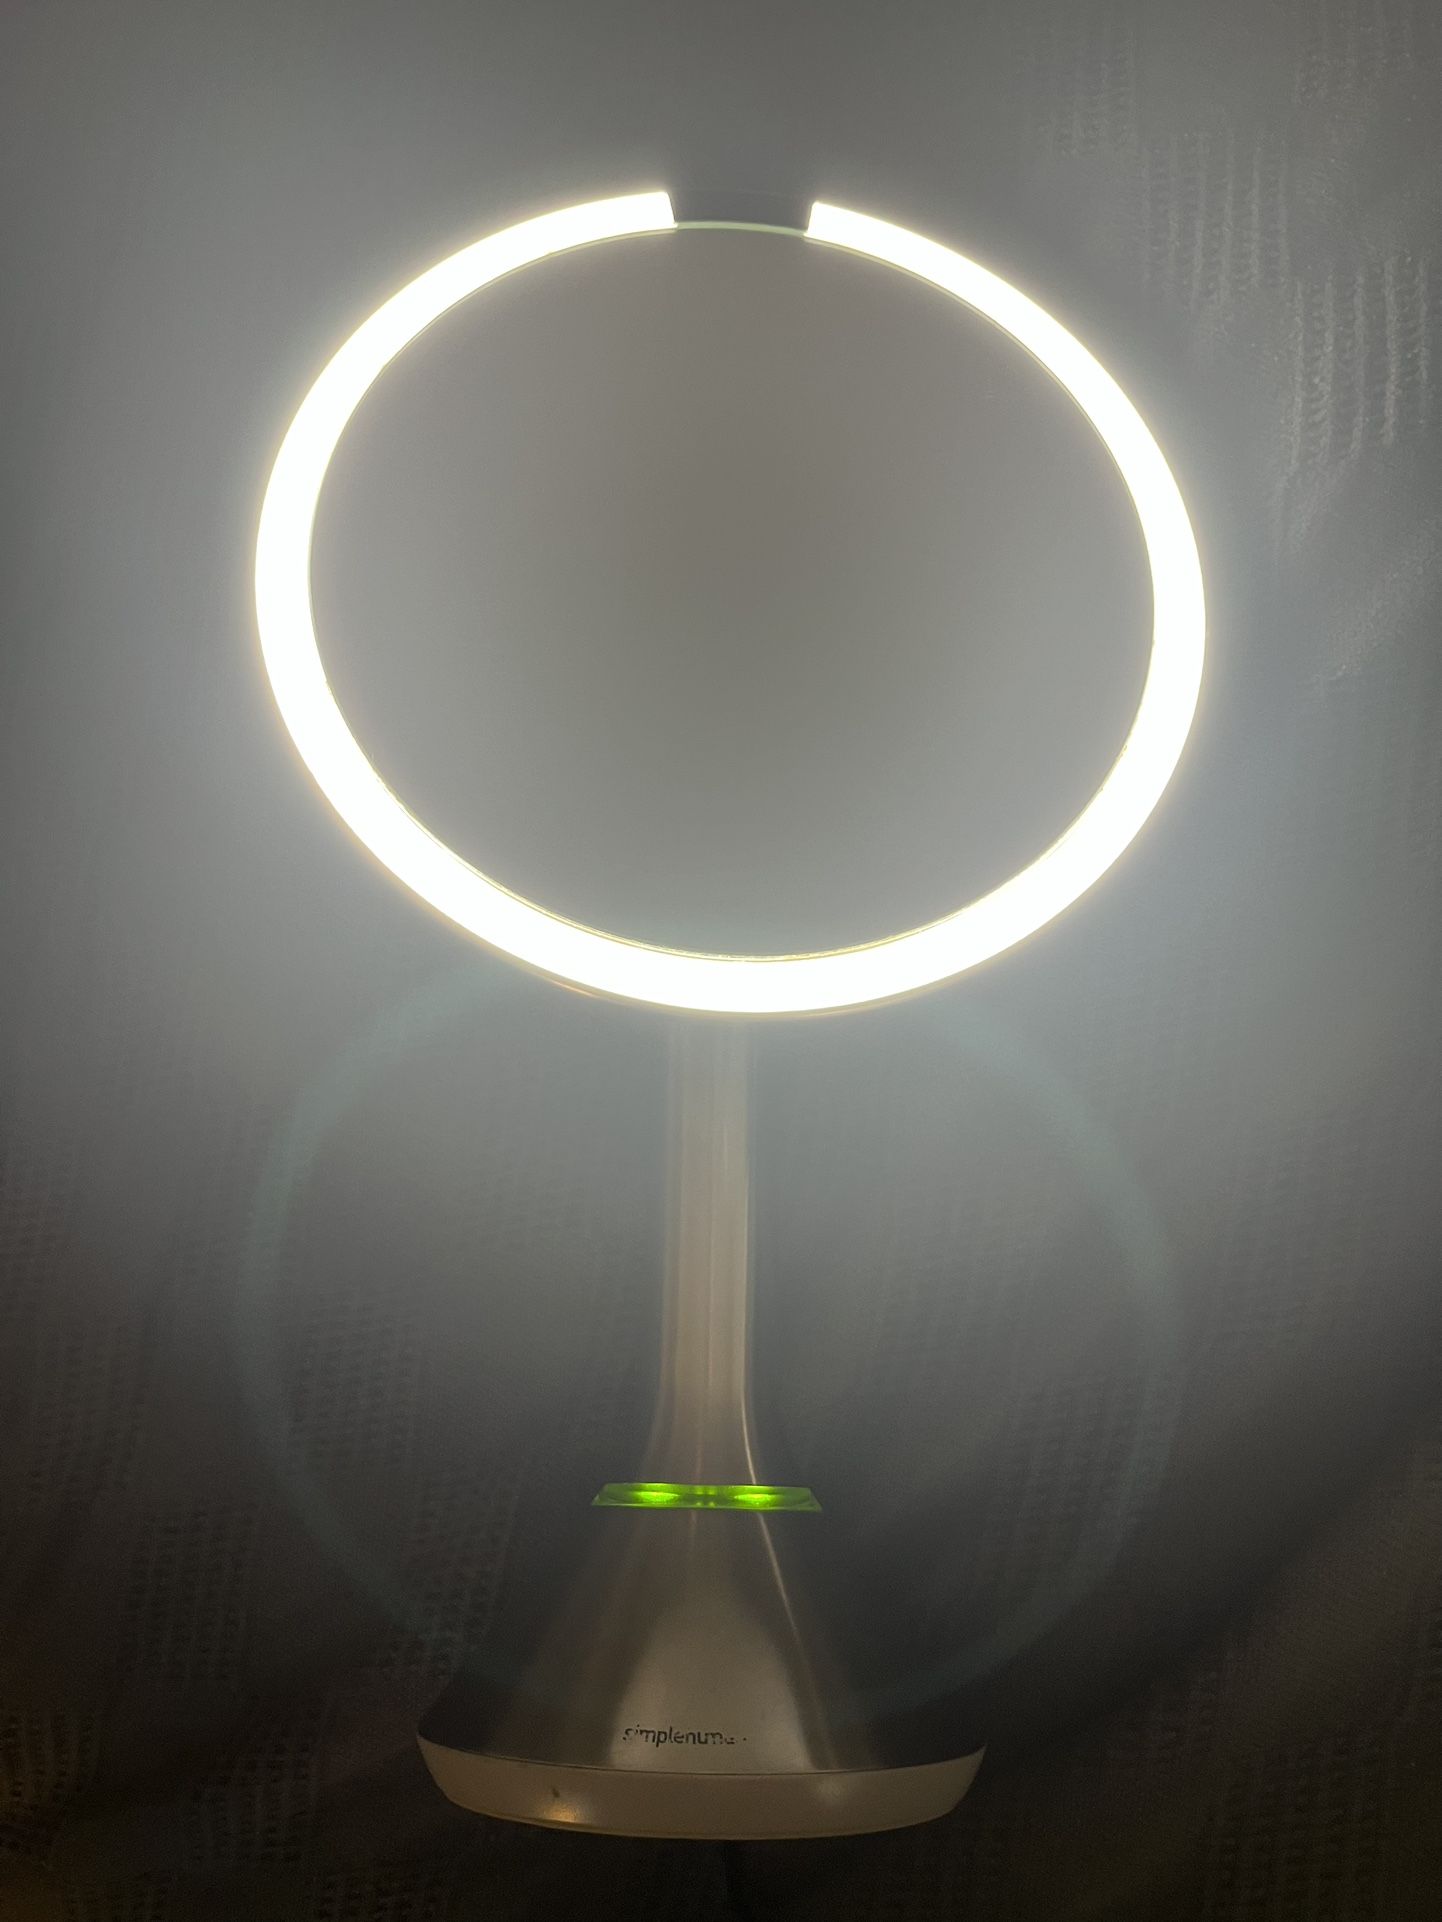 Simplehuman 8” lighted sensor mirror